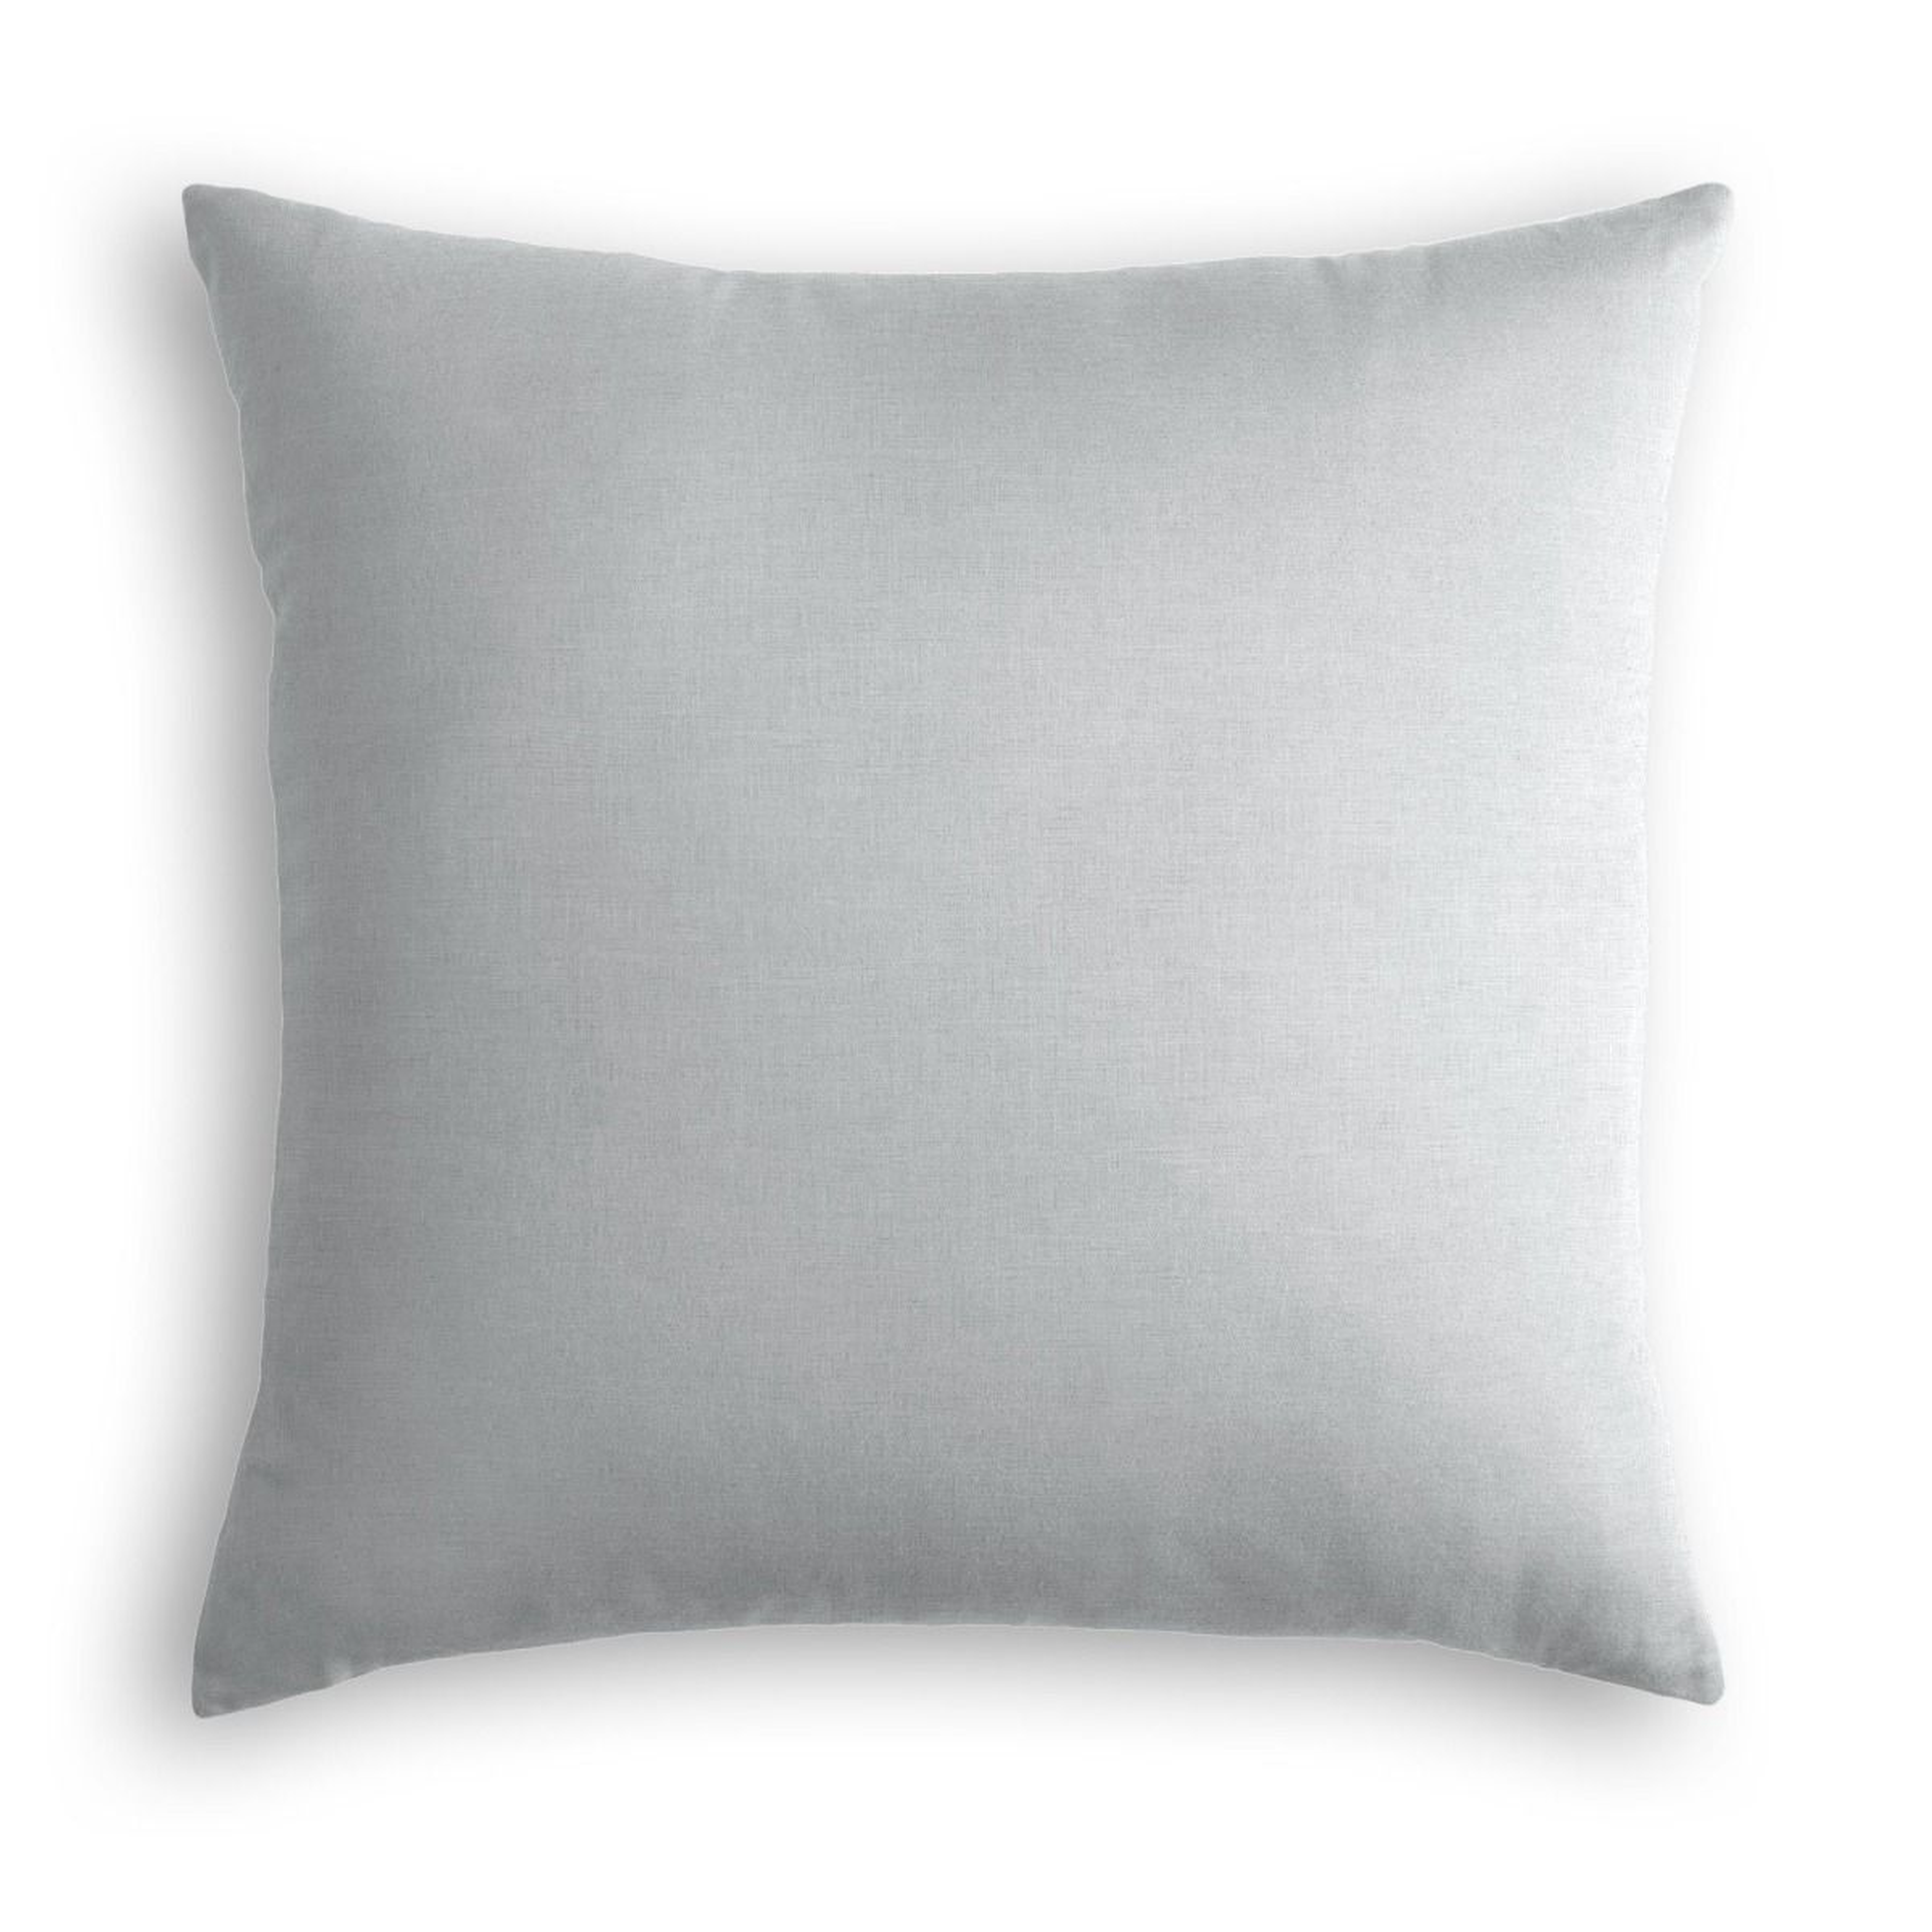 Classic Linen Pillow, Classic Gray, 20" x 20" - Havenly Essentials